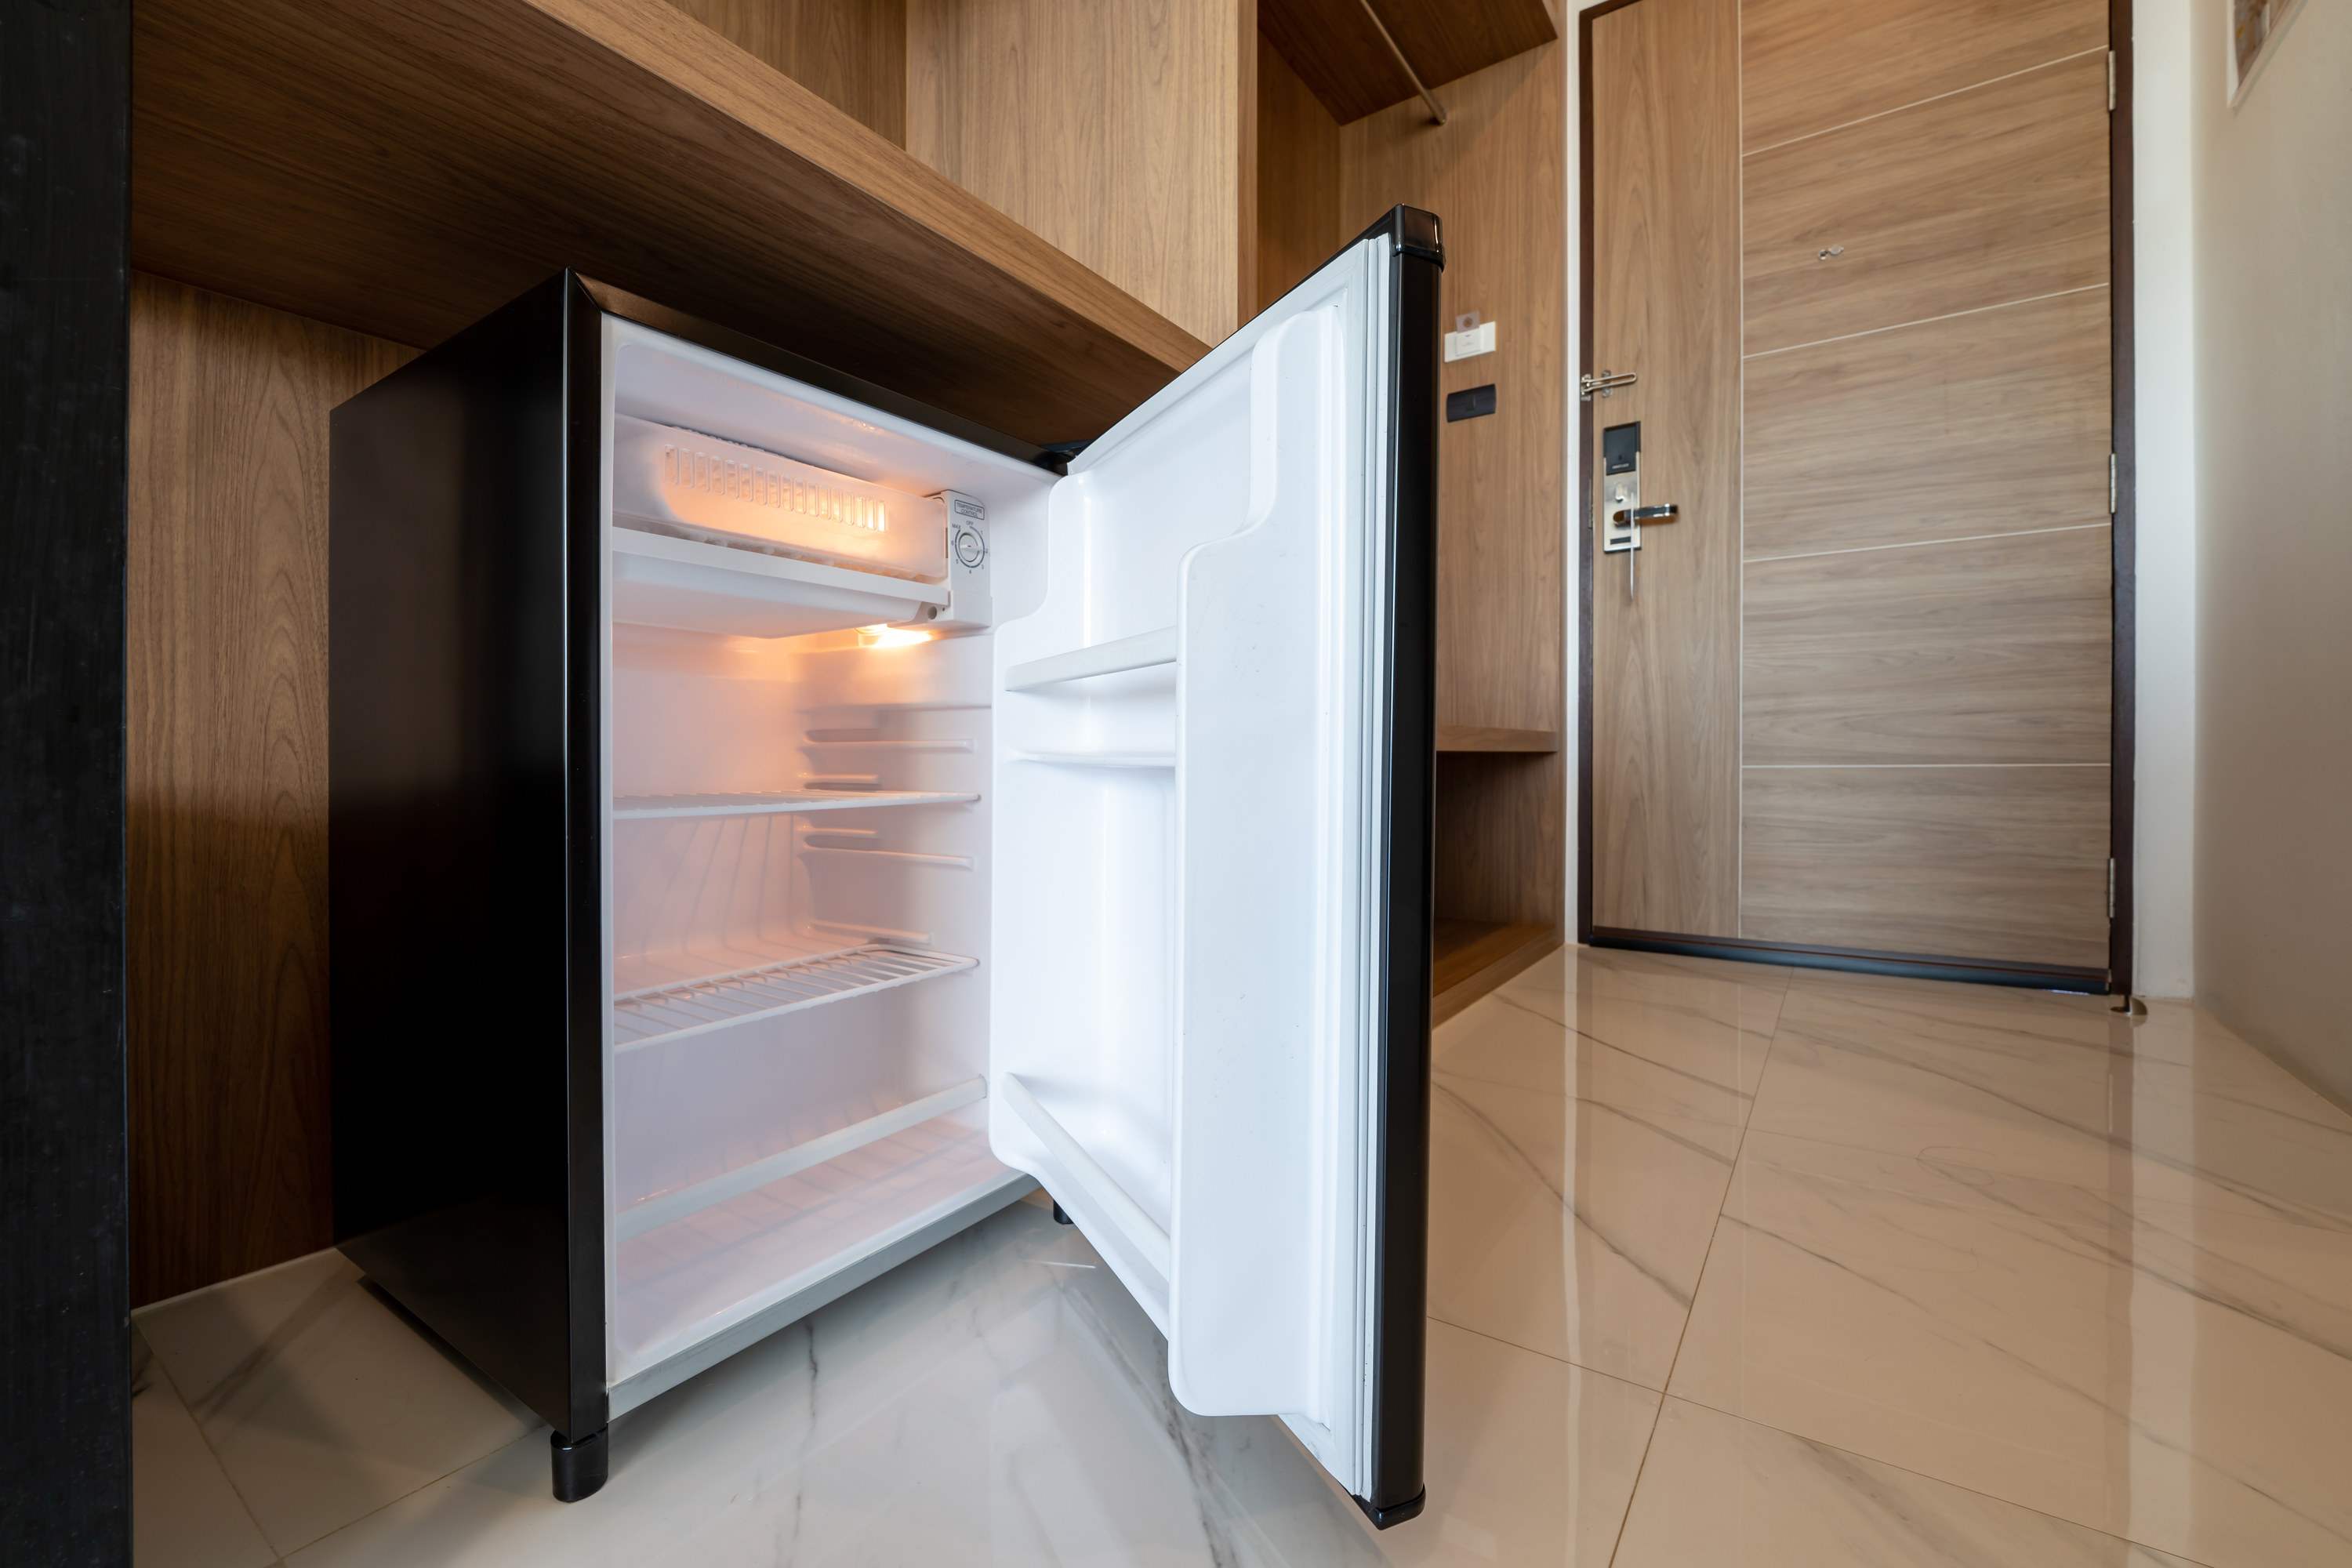 A hotel mini fridge that&#x27;s empty with the door open